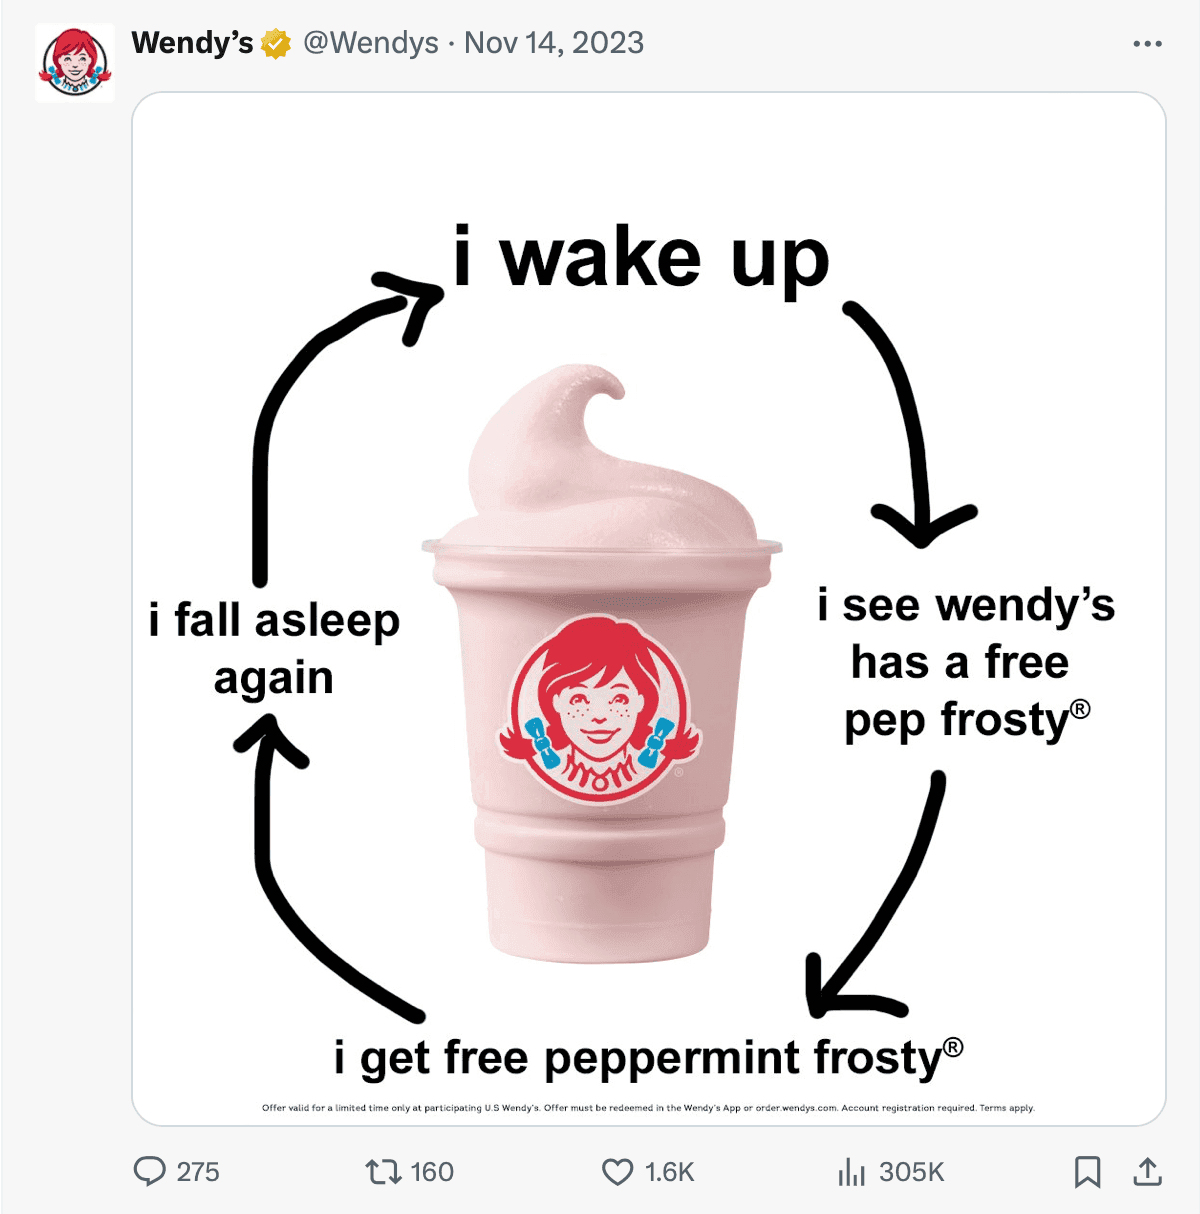 Wendy's peppermint frosty twitter post